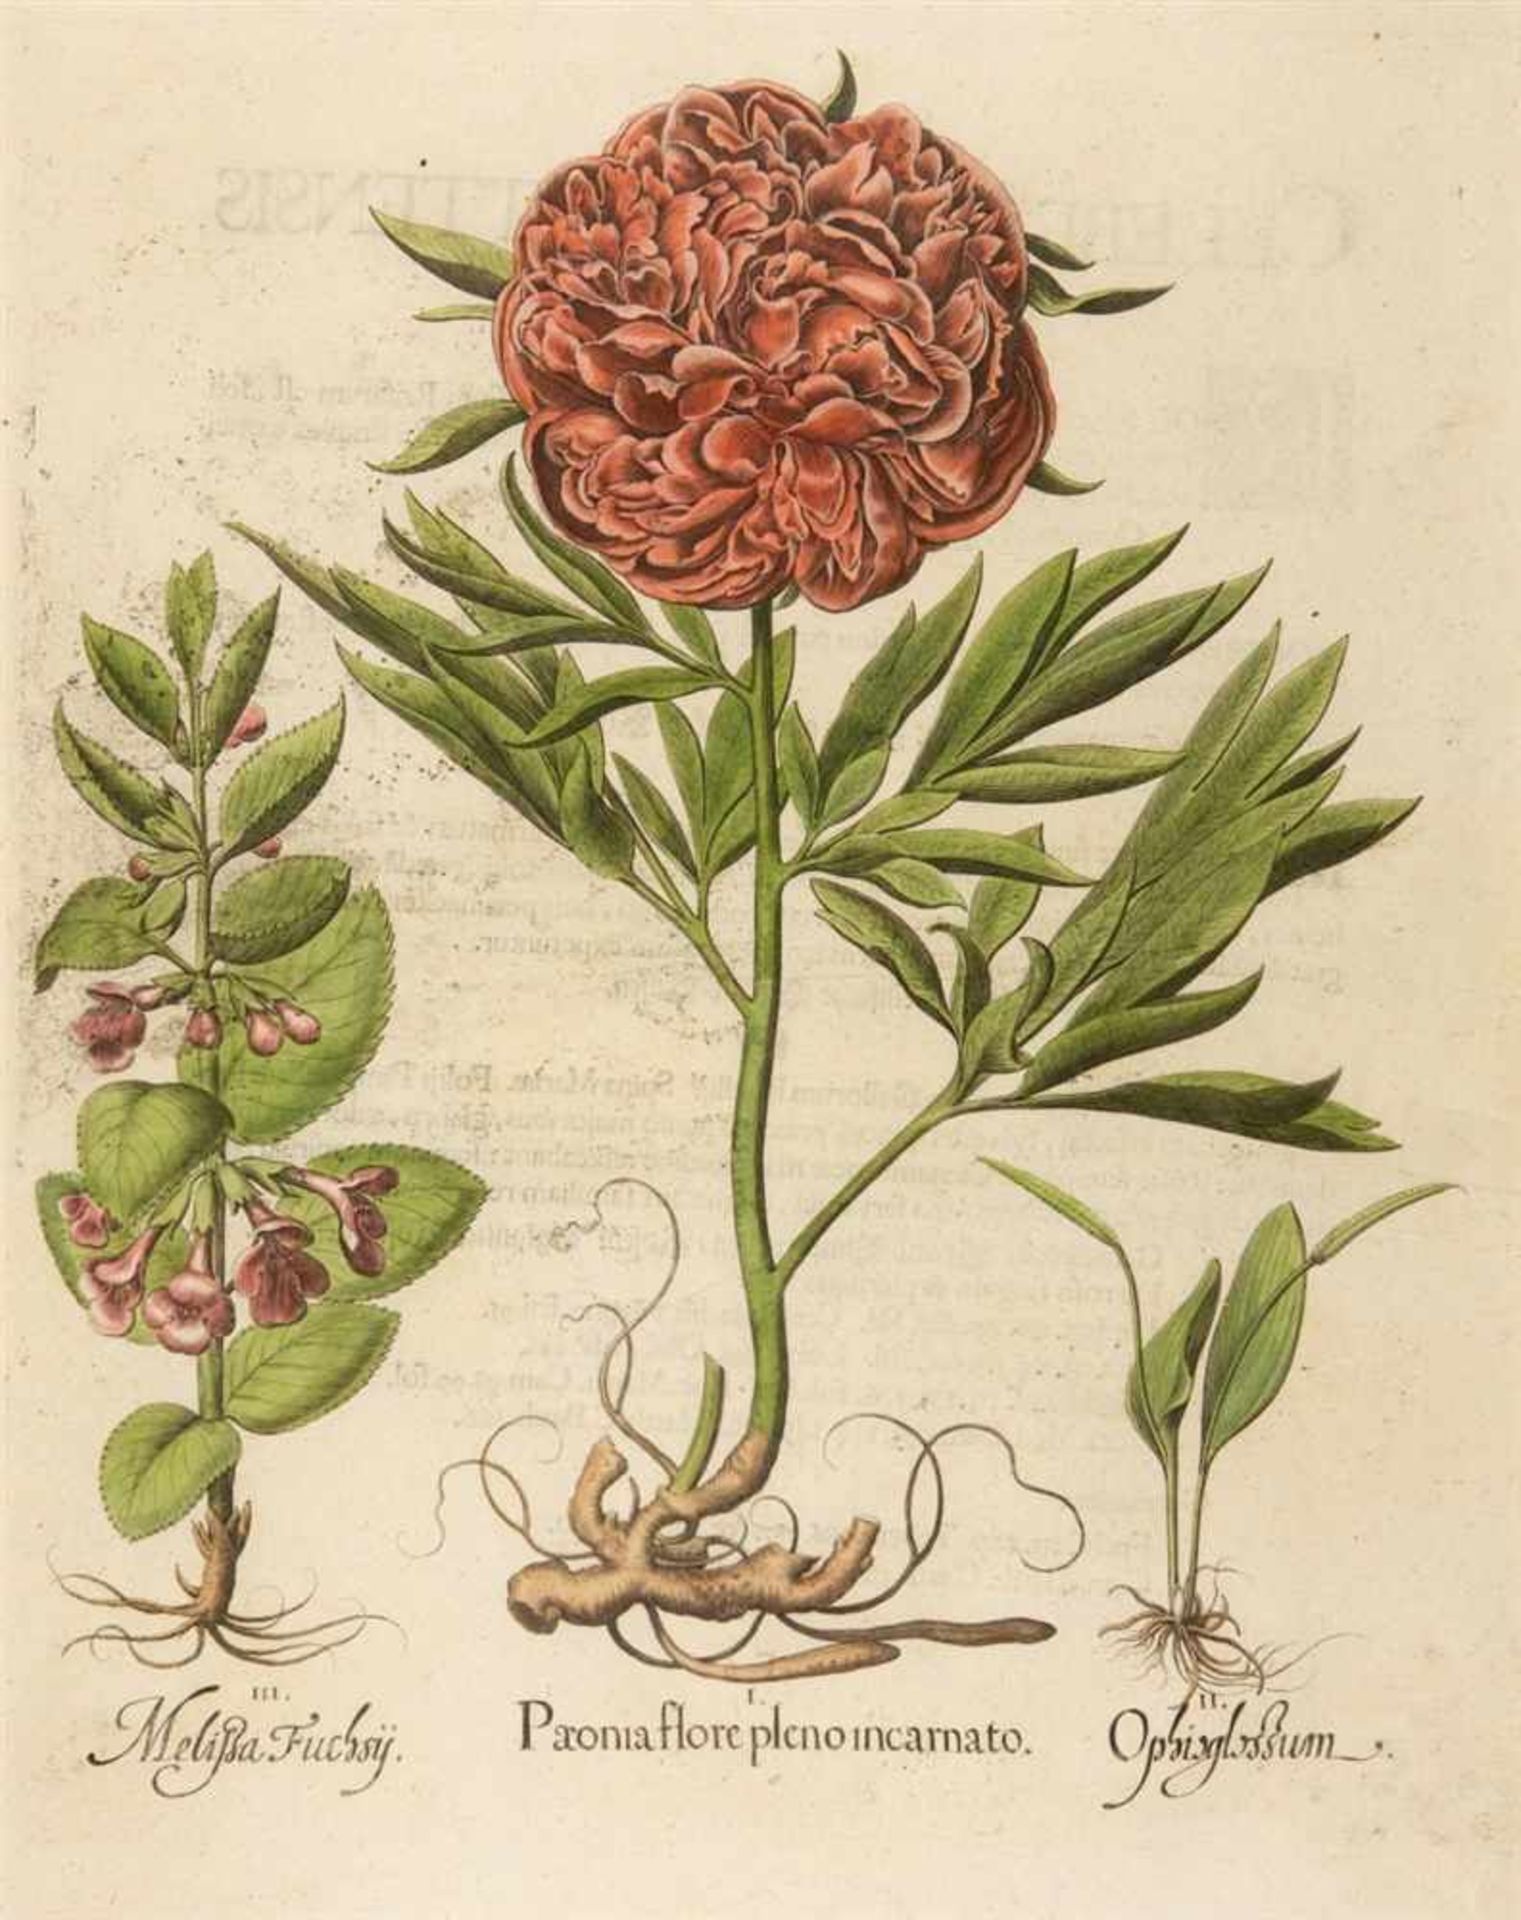 Hortus Eystettensis. I. Paeonia flore pleno incarnato / II. Ophioglossium / III. Melissa Fuchsii,